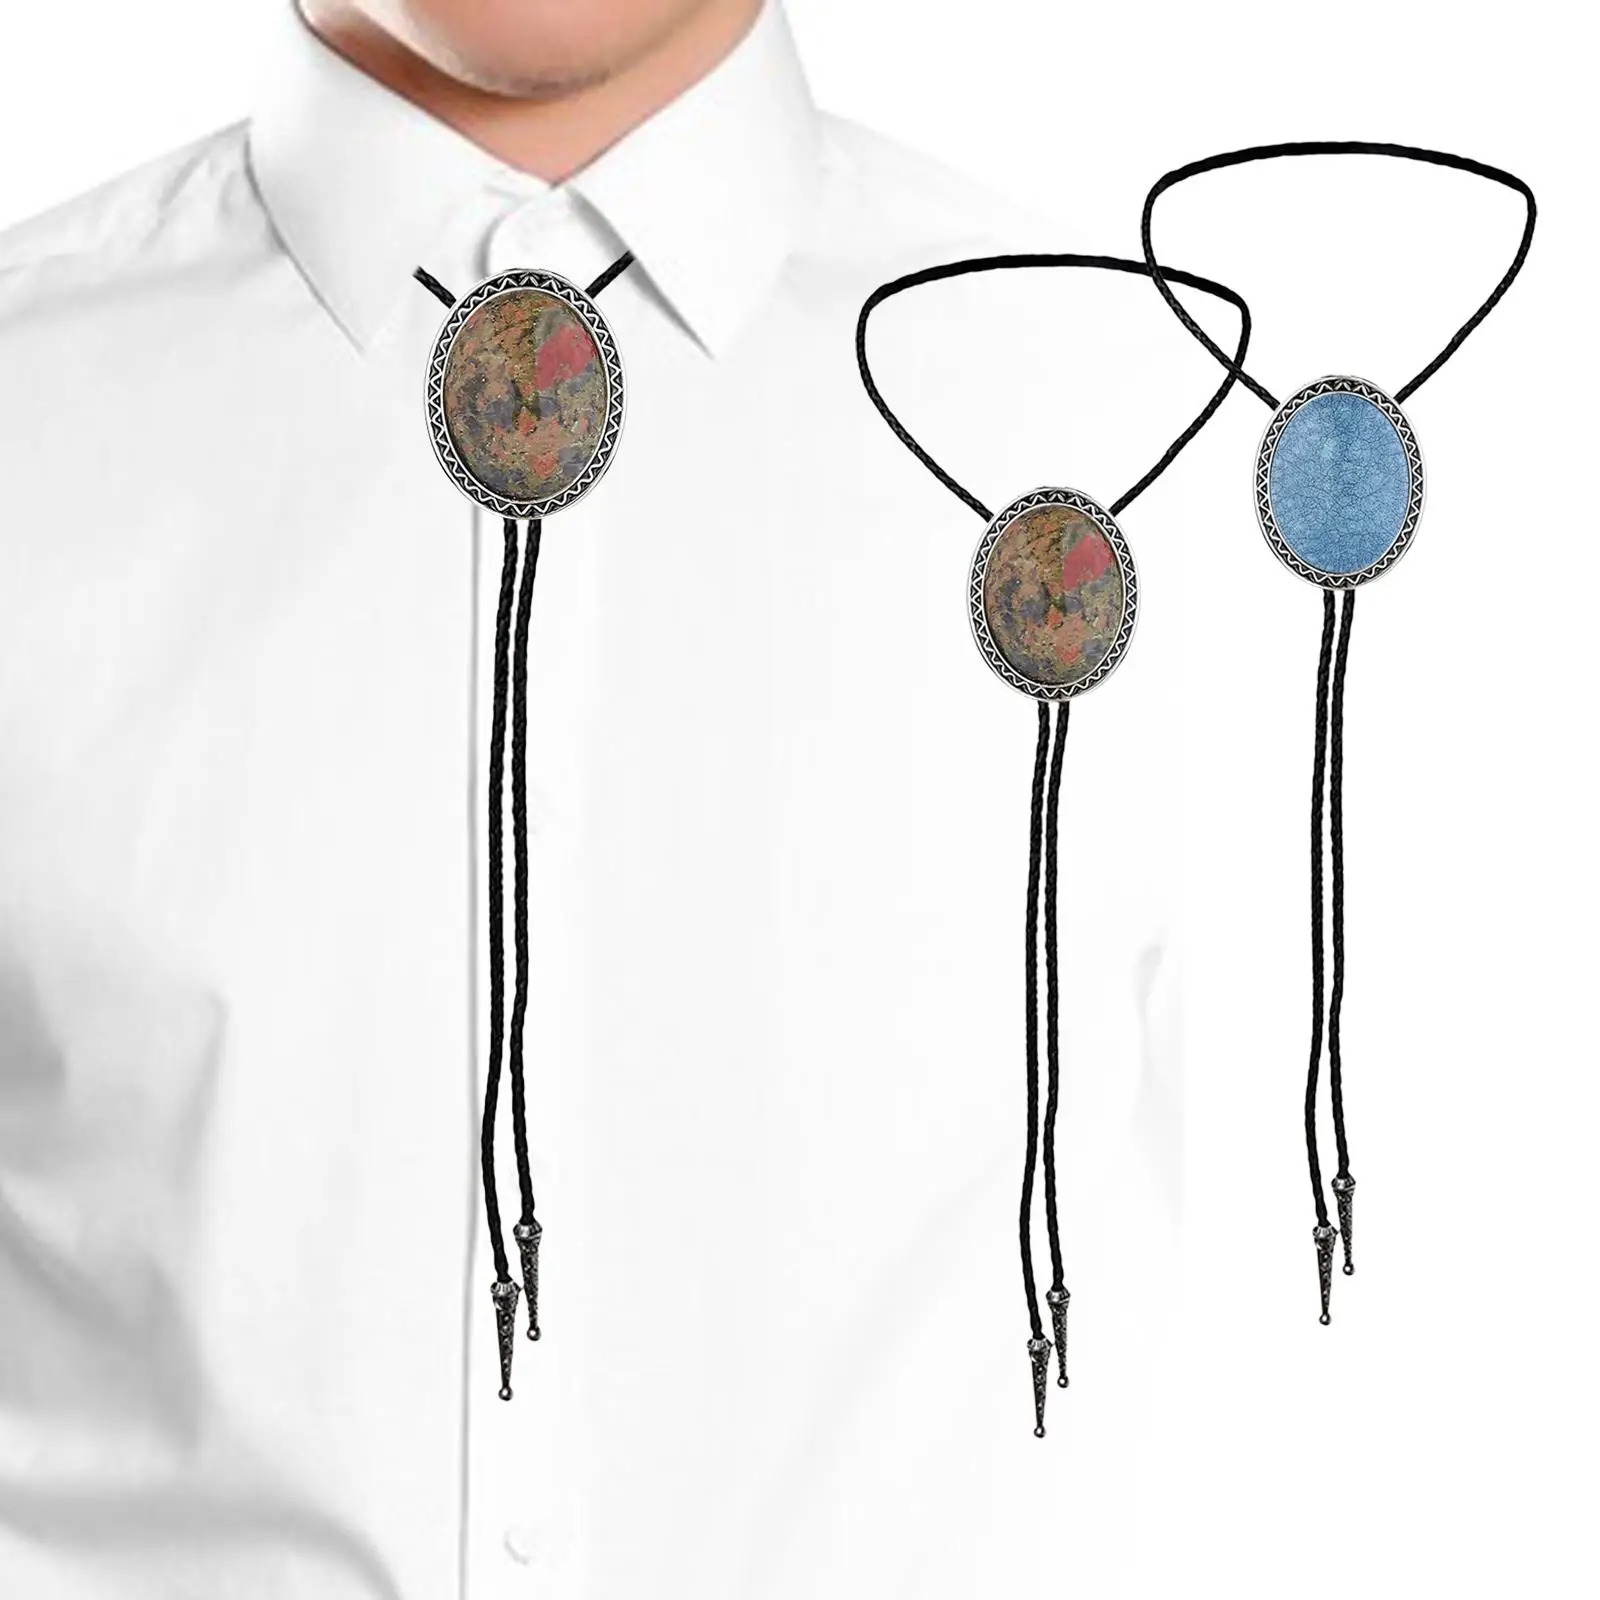 Stylish Bolo Tie Necktie Pendant PU Leather Rope Versatile Casual Necklace Jewelry Adjustable Shirt Neck Ties